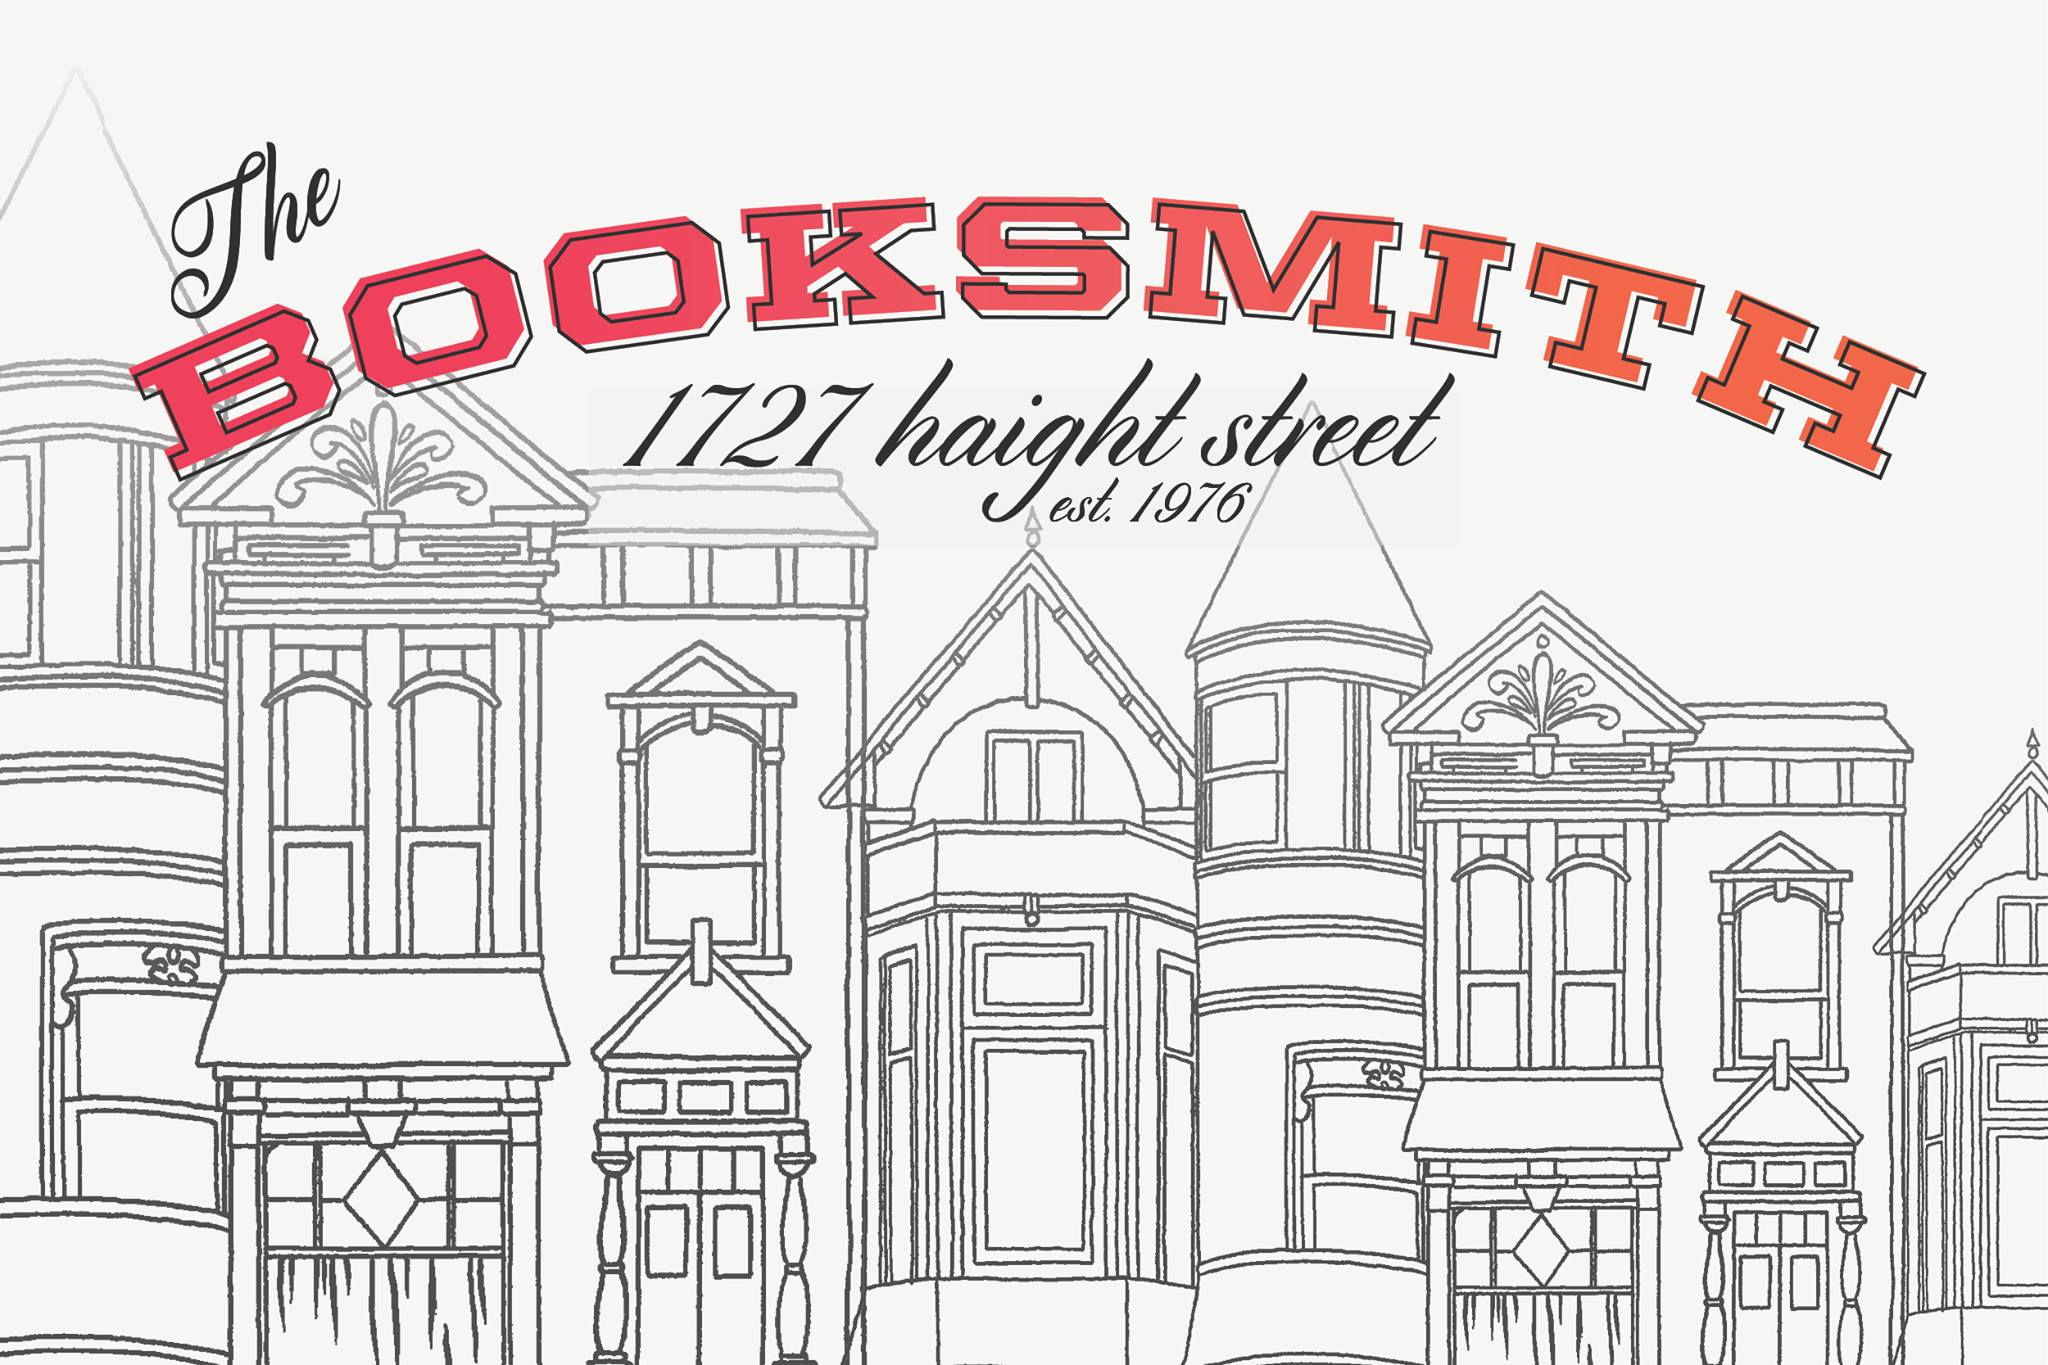 The Booksmith's logo